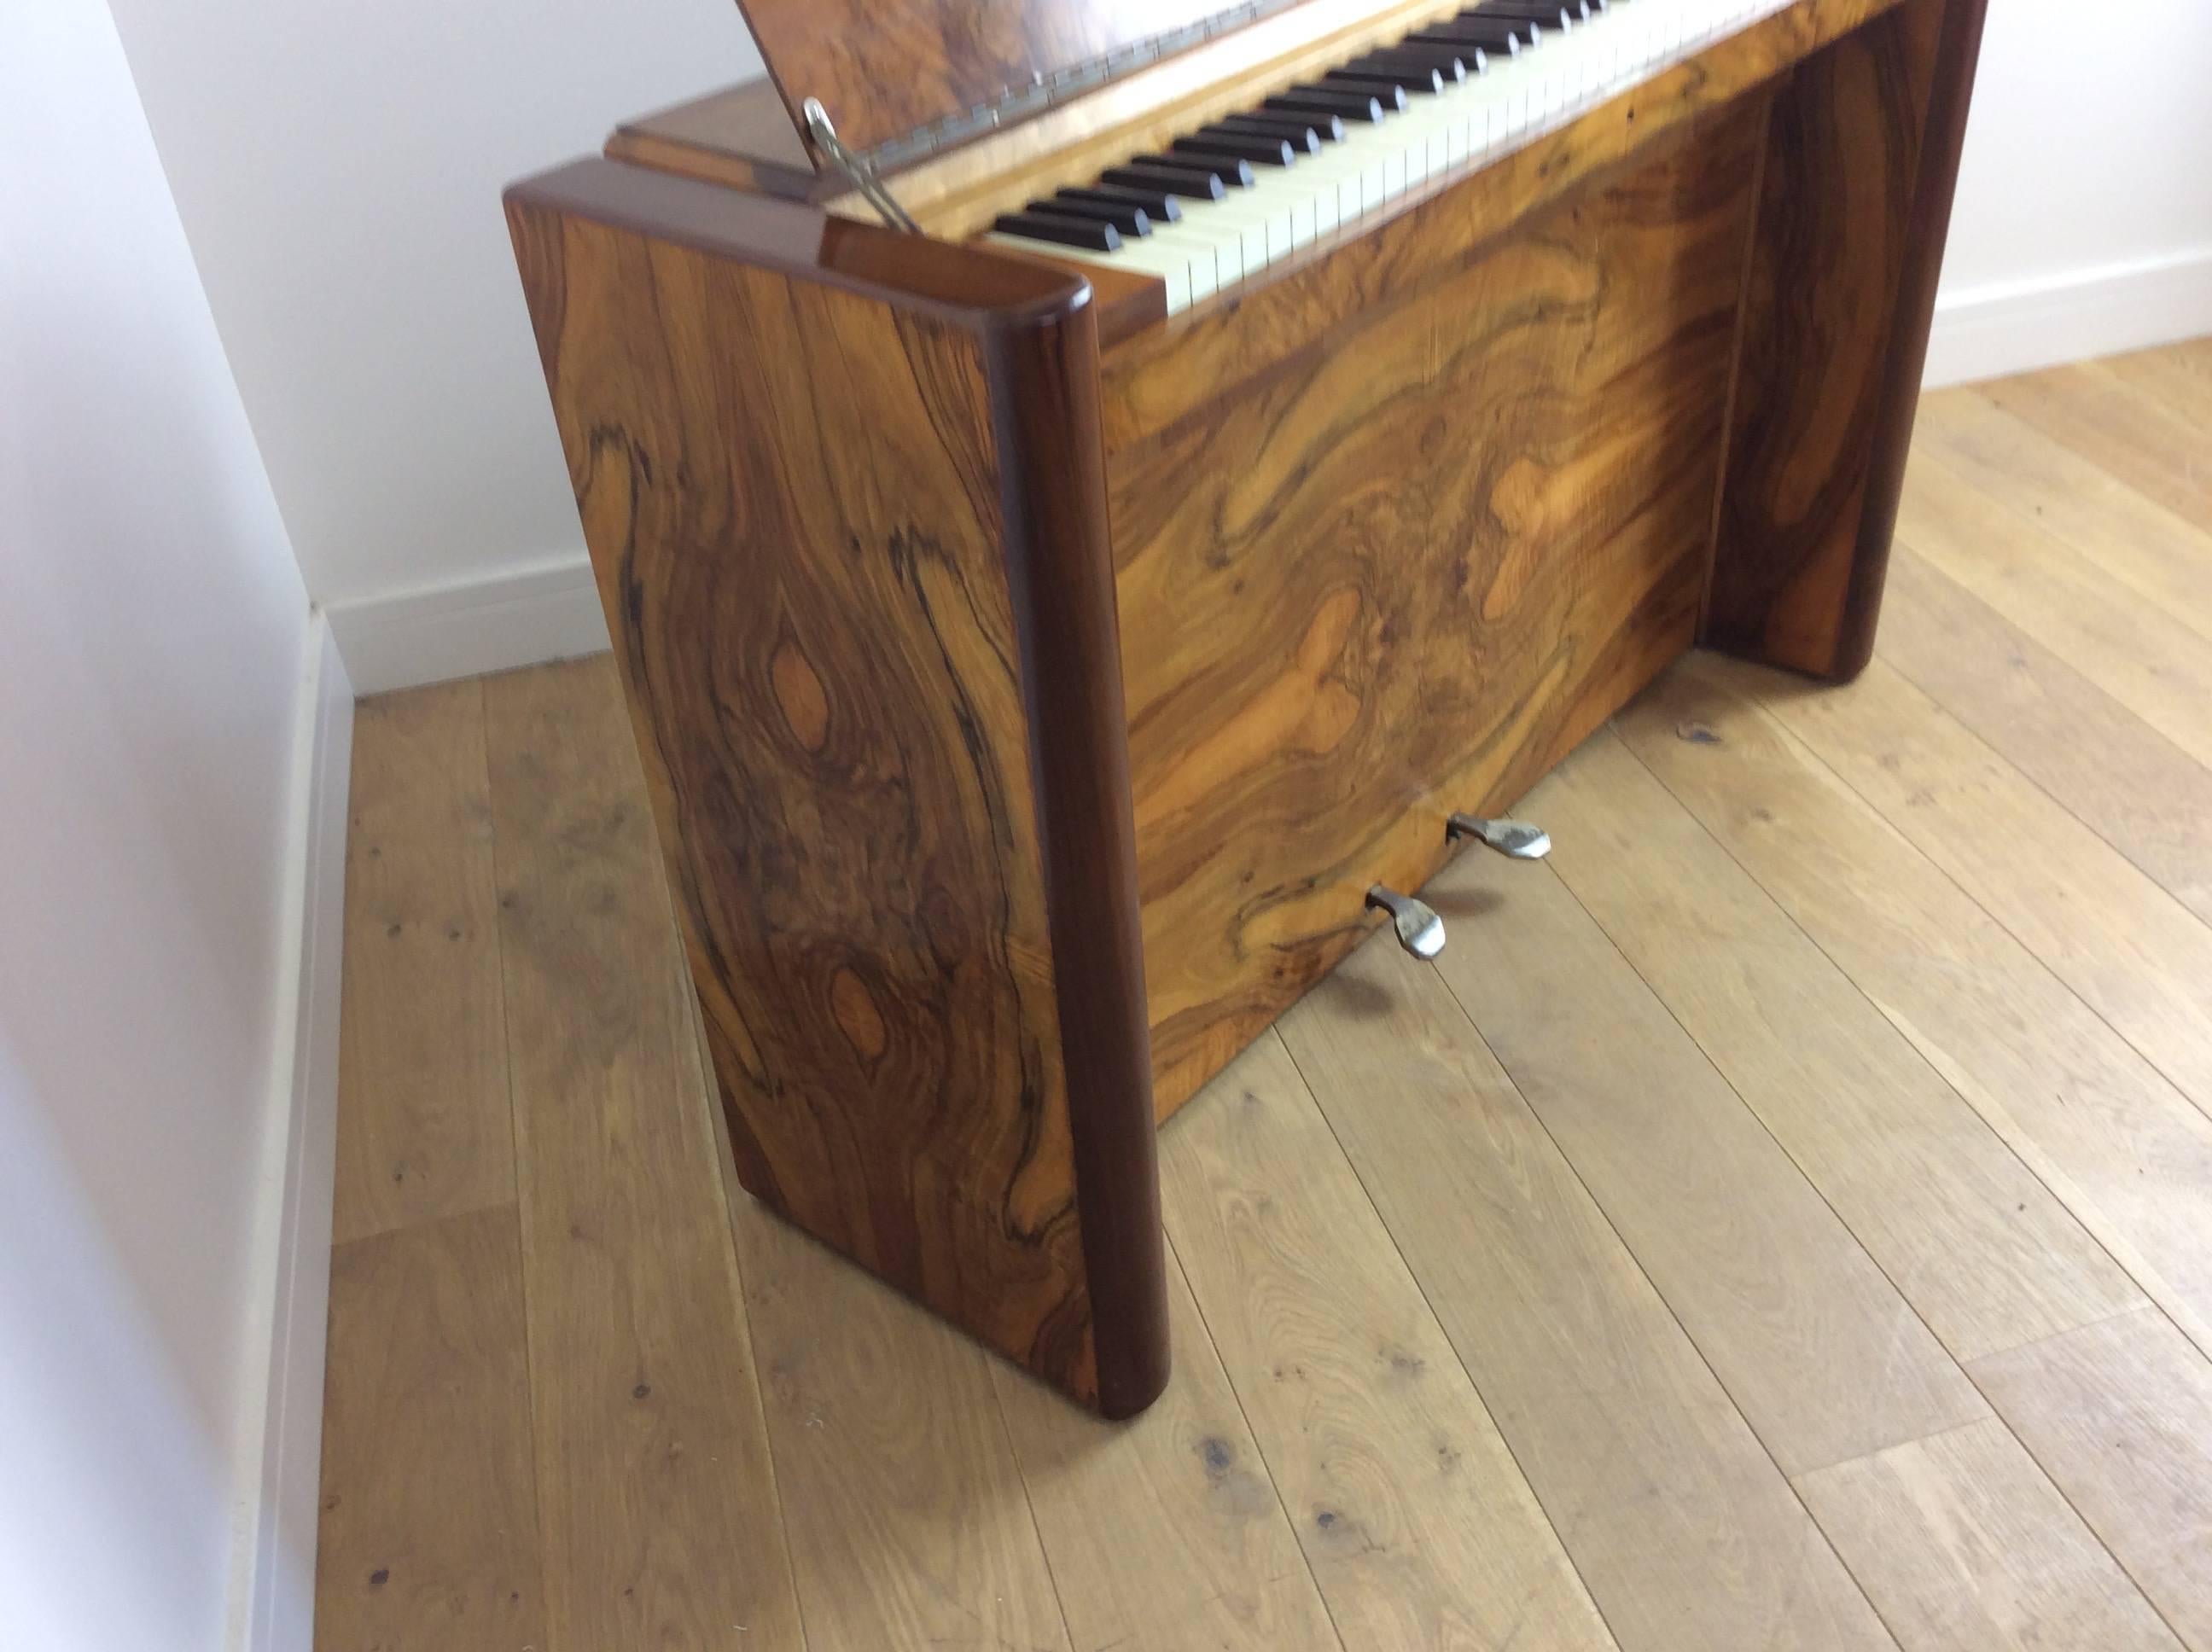 Art Deco Piano by Eavestaff in a Stunning Figured Walnut 2